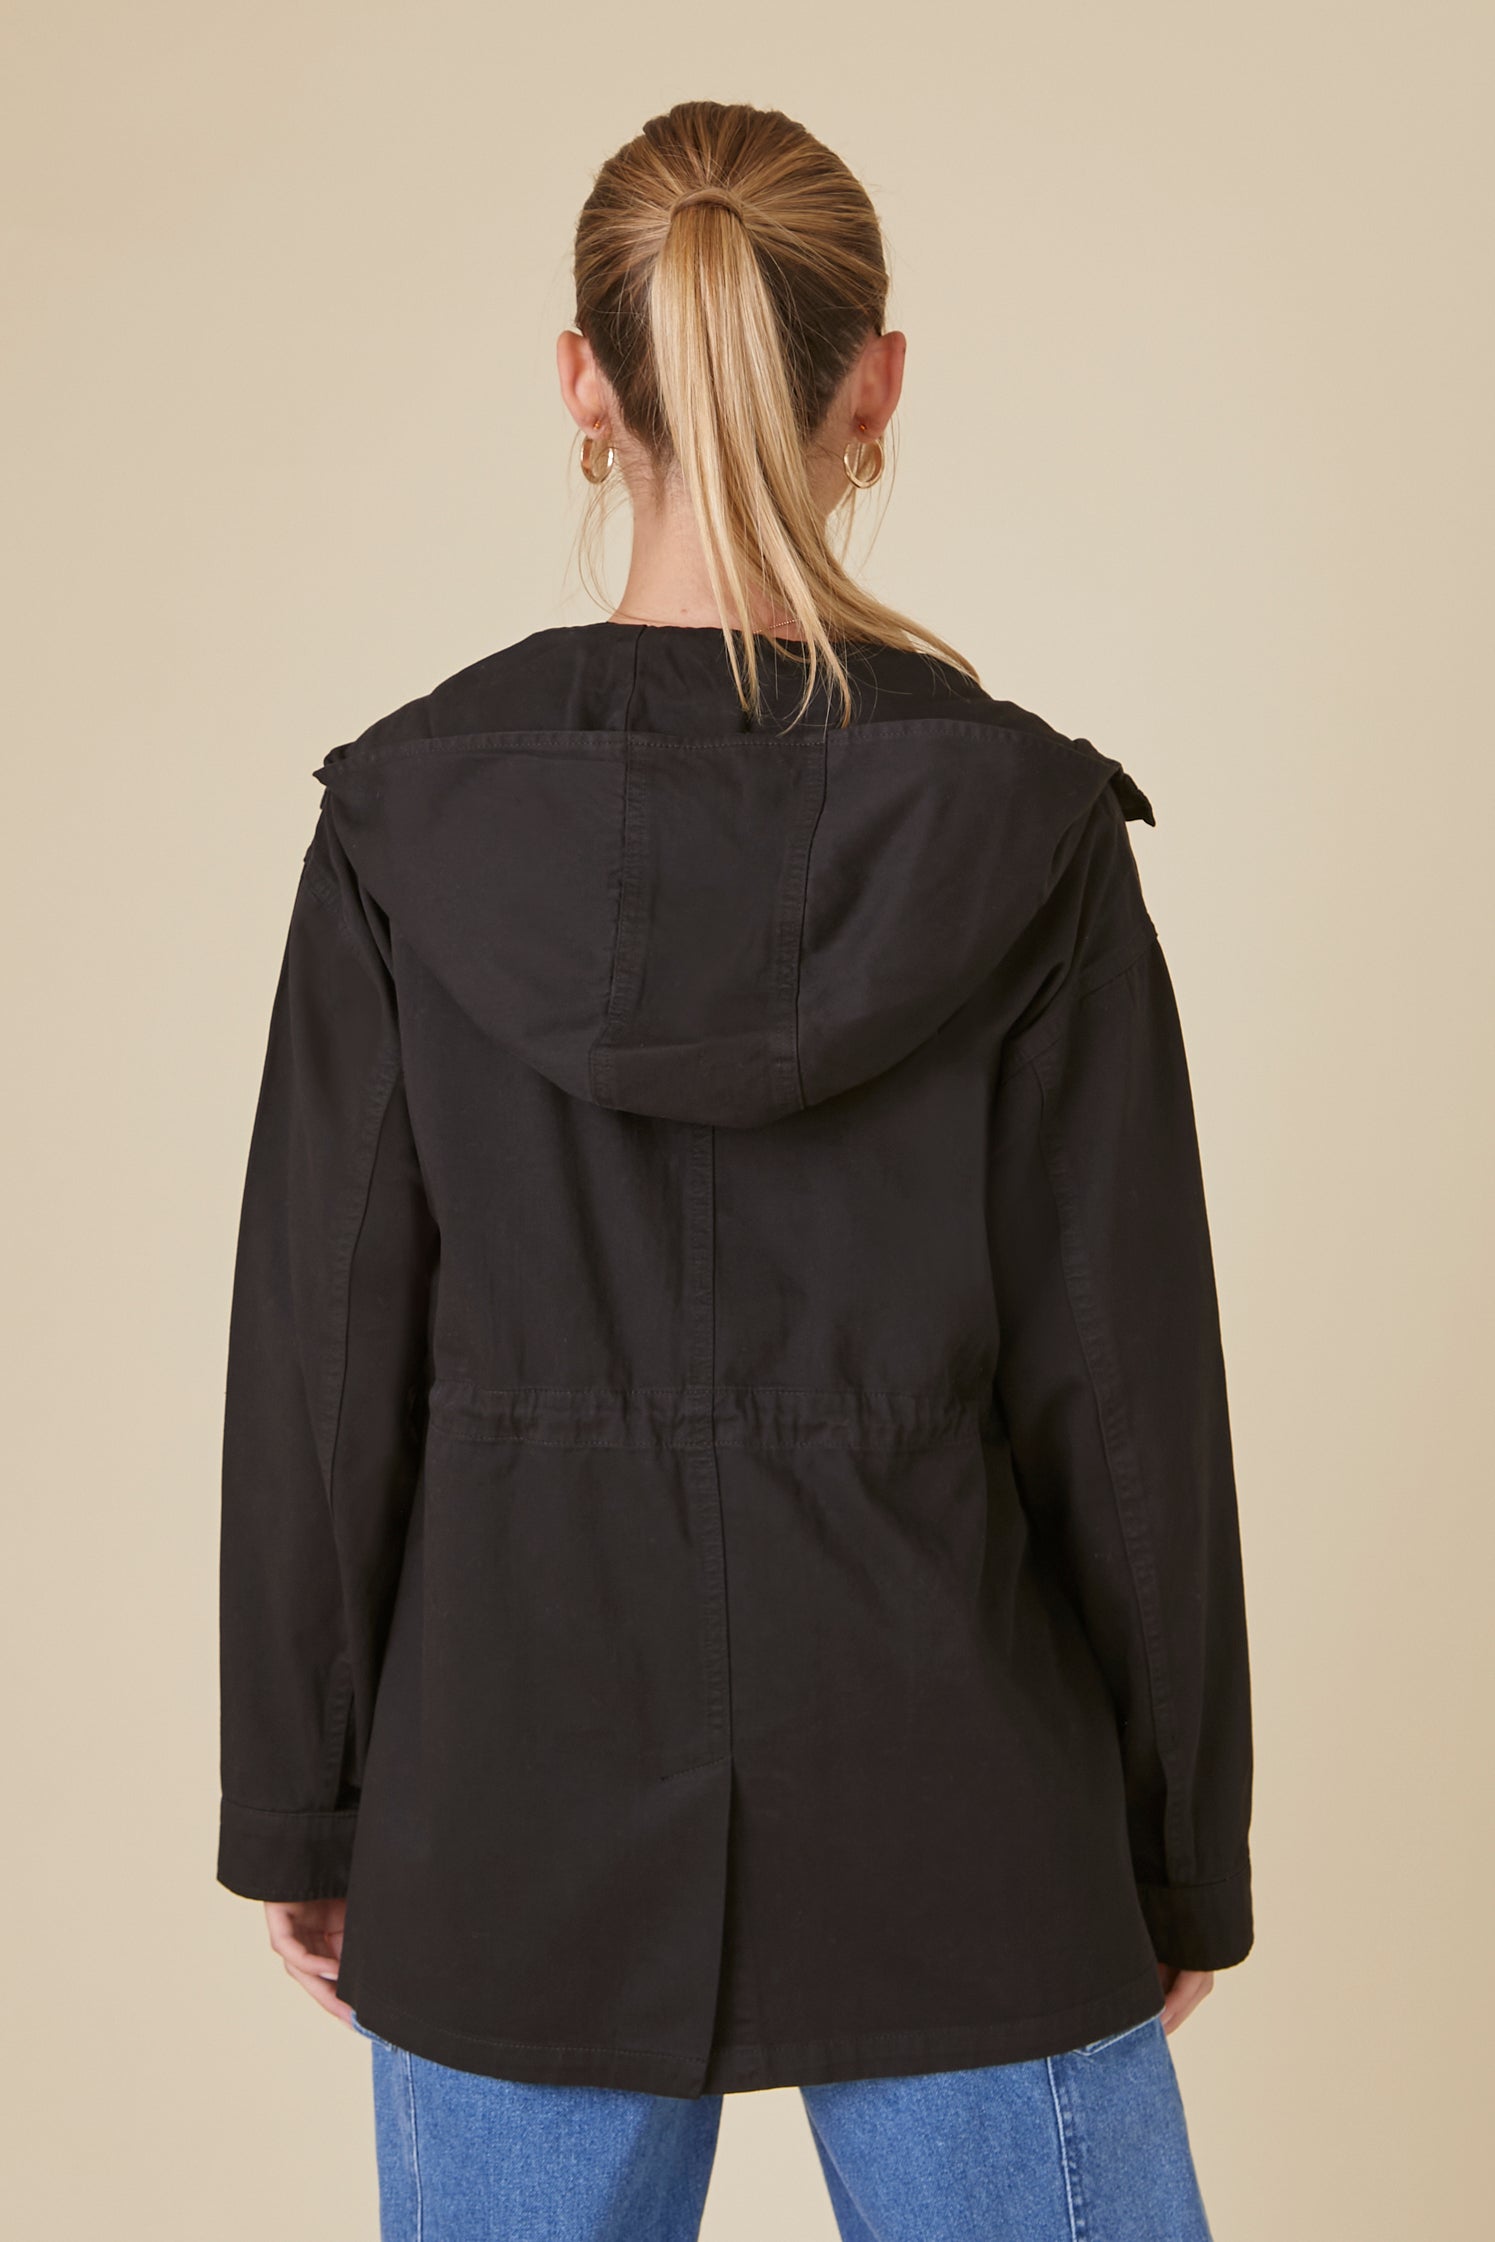 Black Hooded Uniform Utility Jacket 2